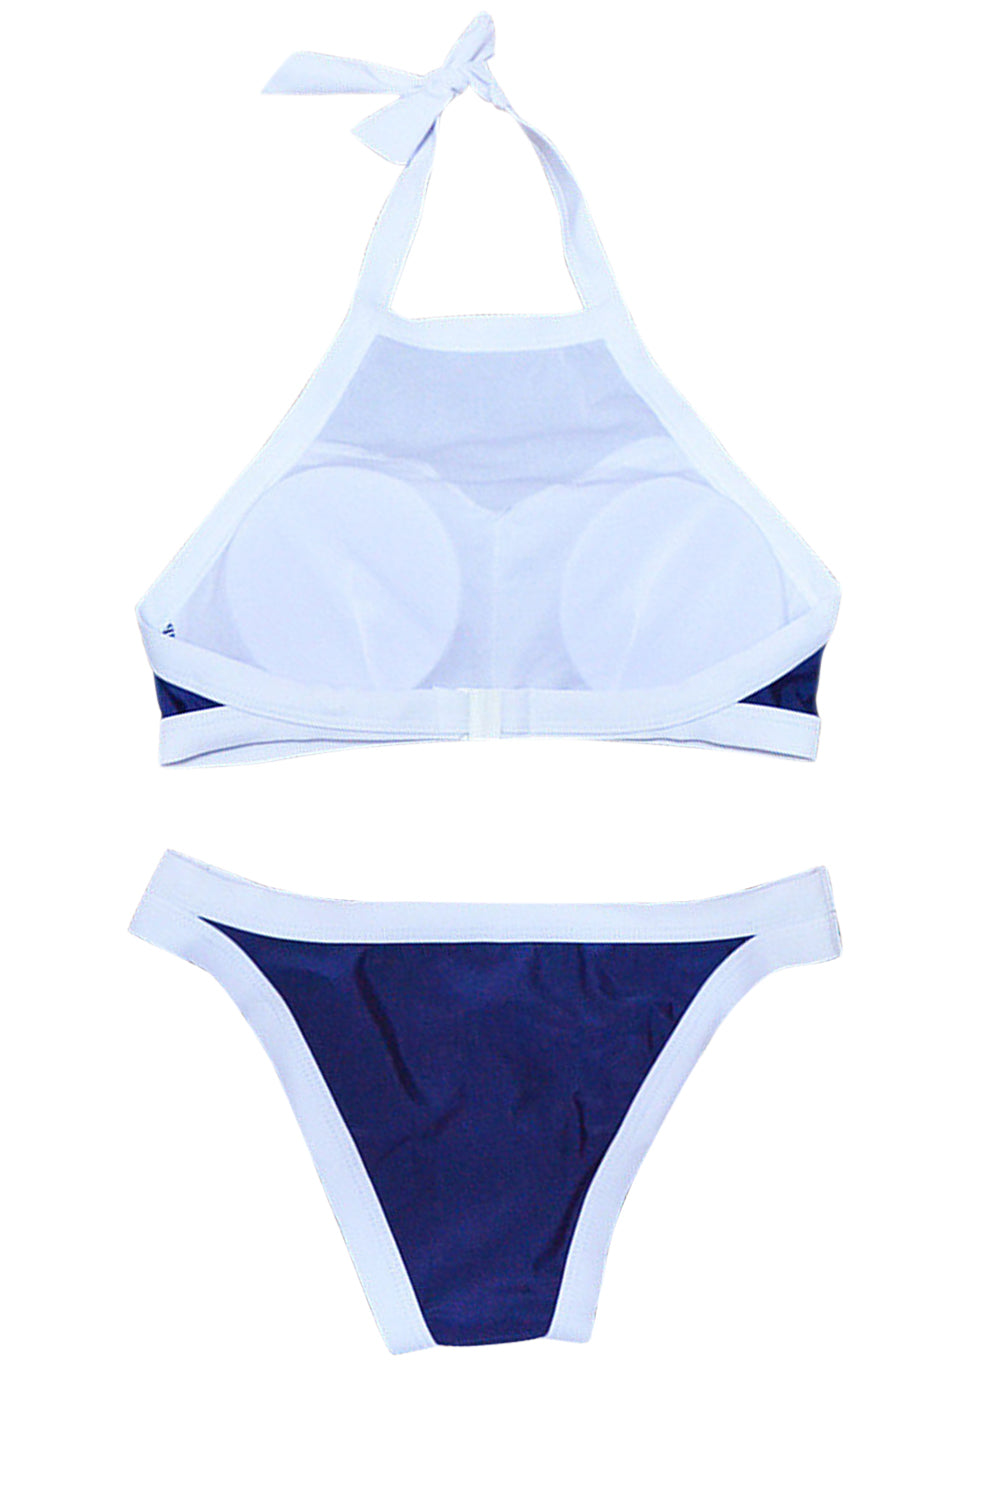 Iyasson Navy Blue High Neck Bikini Top And Double-string Bottom